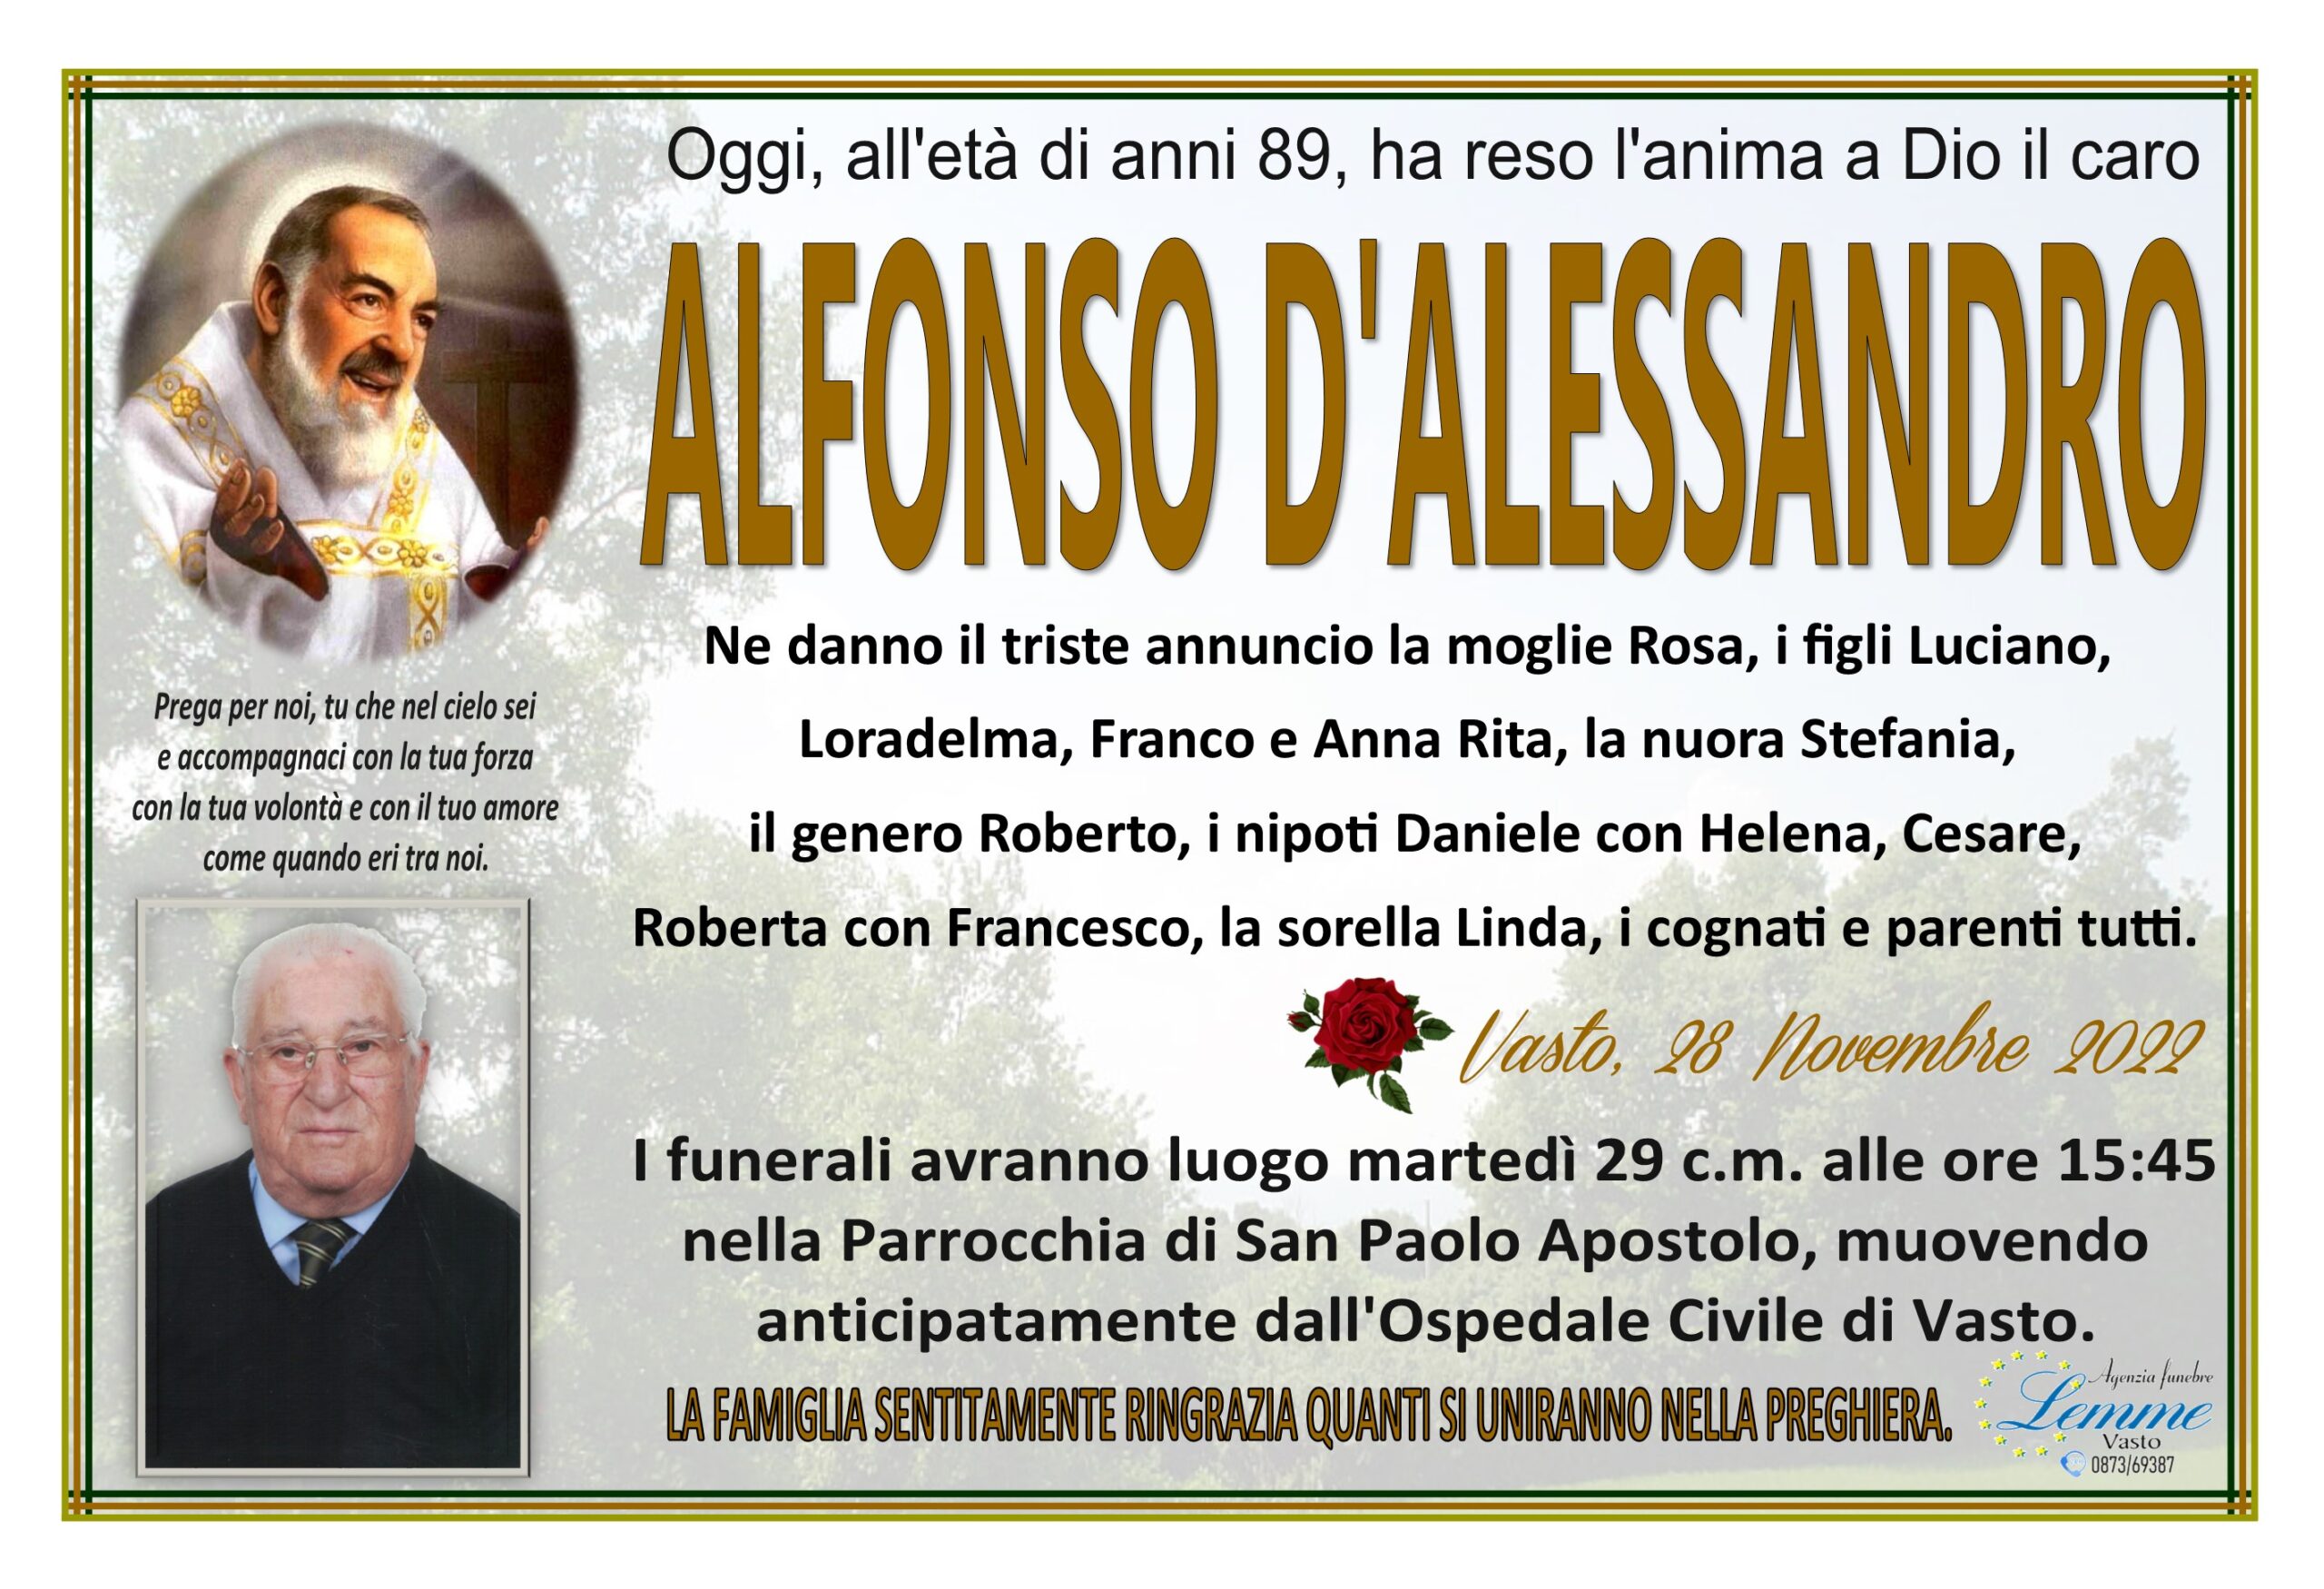 ALFONSO D'ALESSANDRO